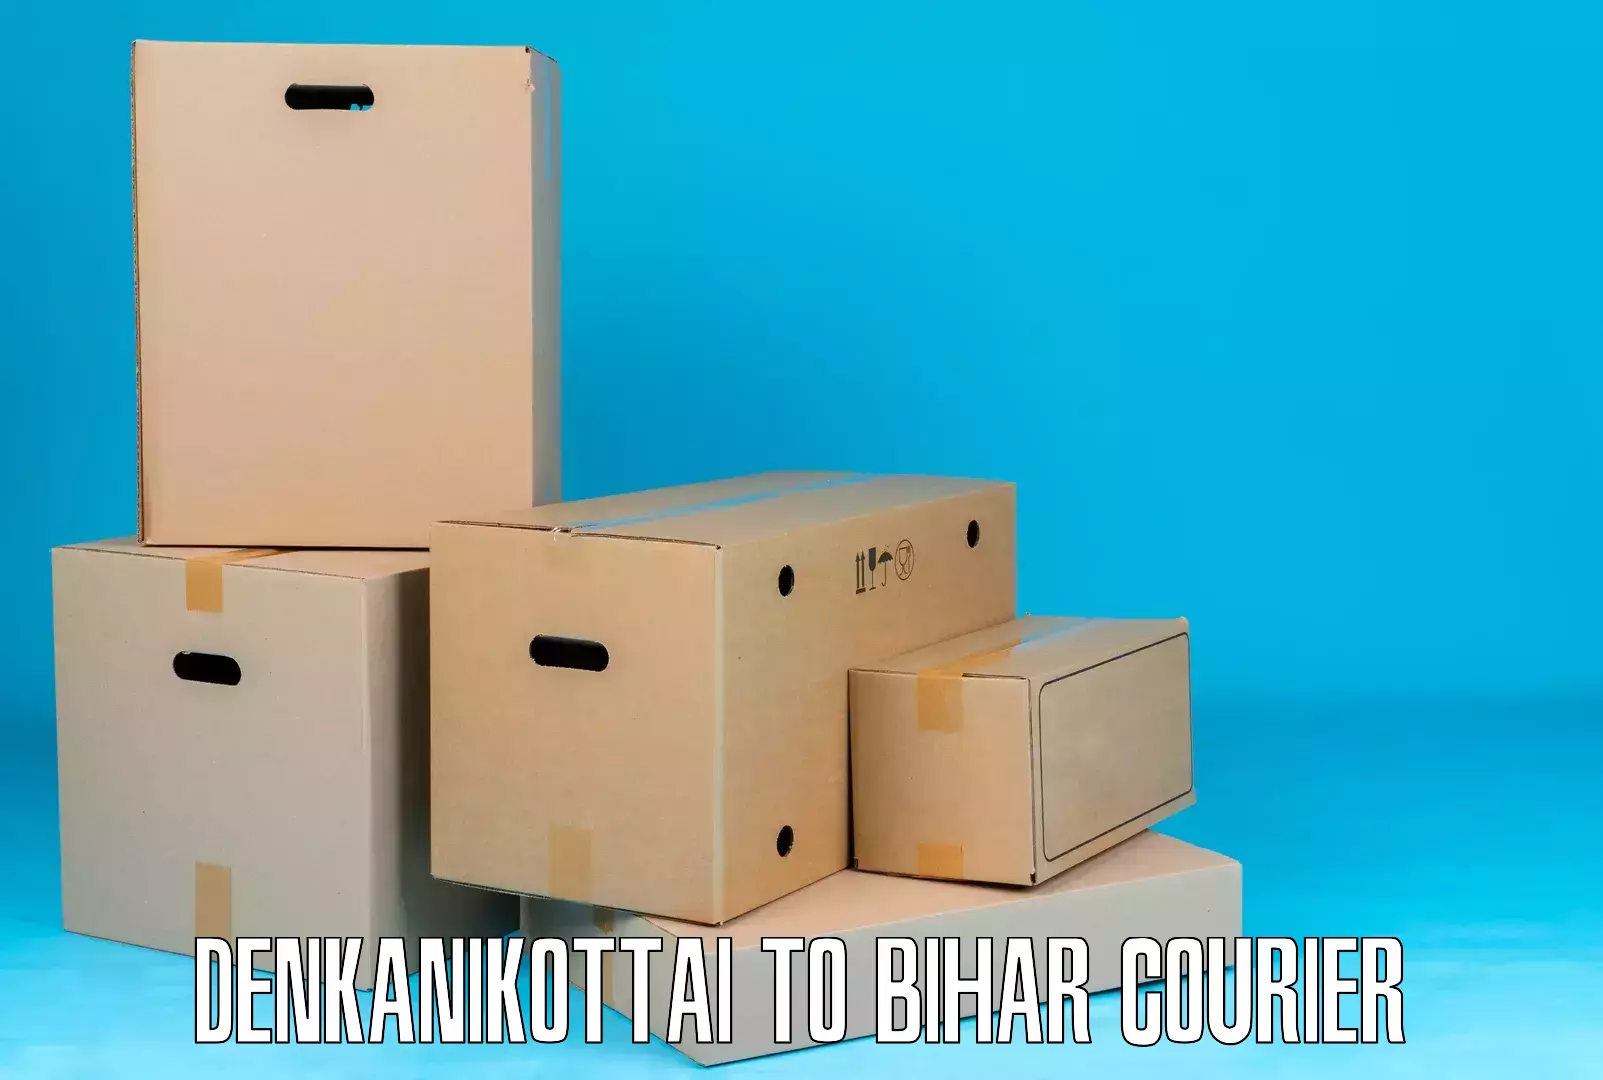 Affordable parcel rates Denkanikottai to Mahnar Bazar